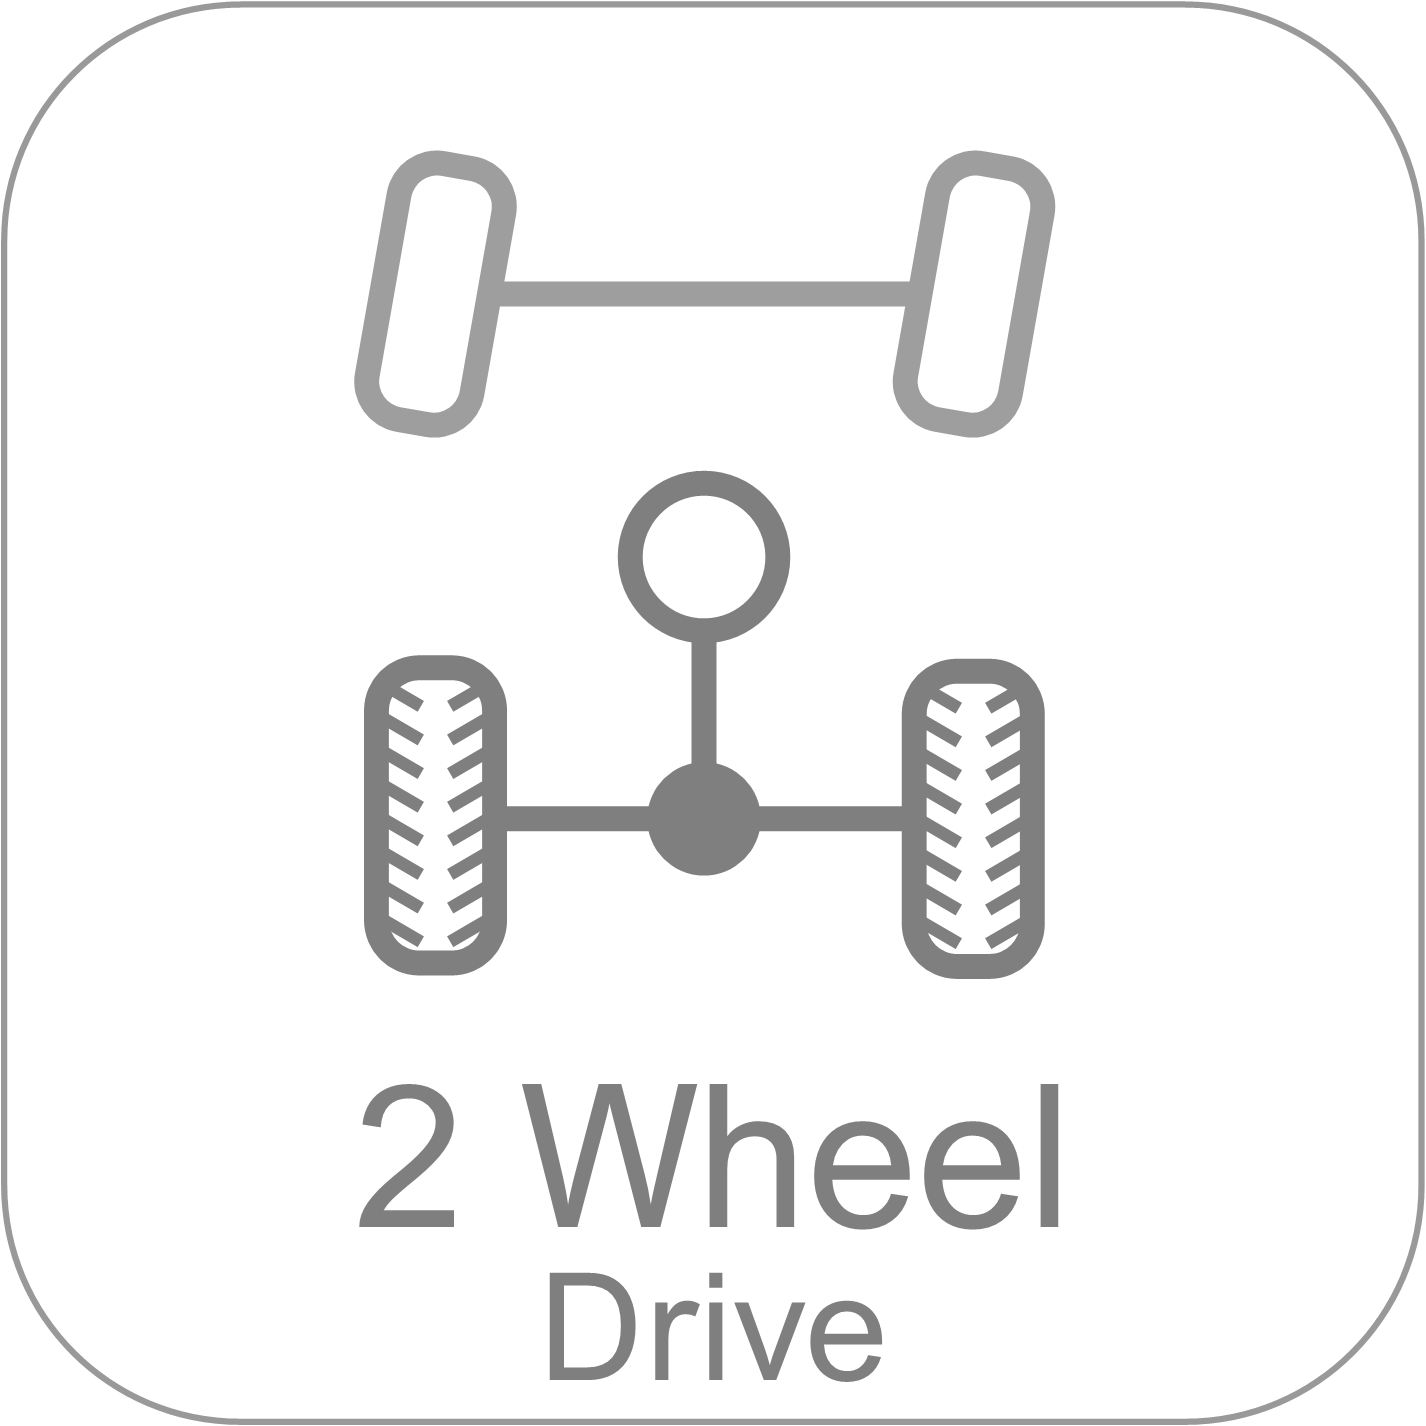 Volquetes Serie DM - 2 Wheel Drive